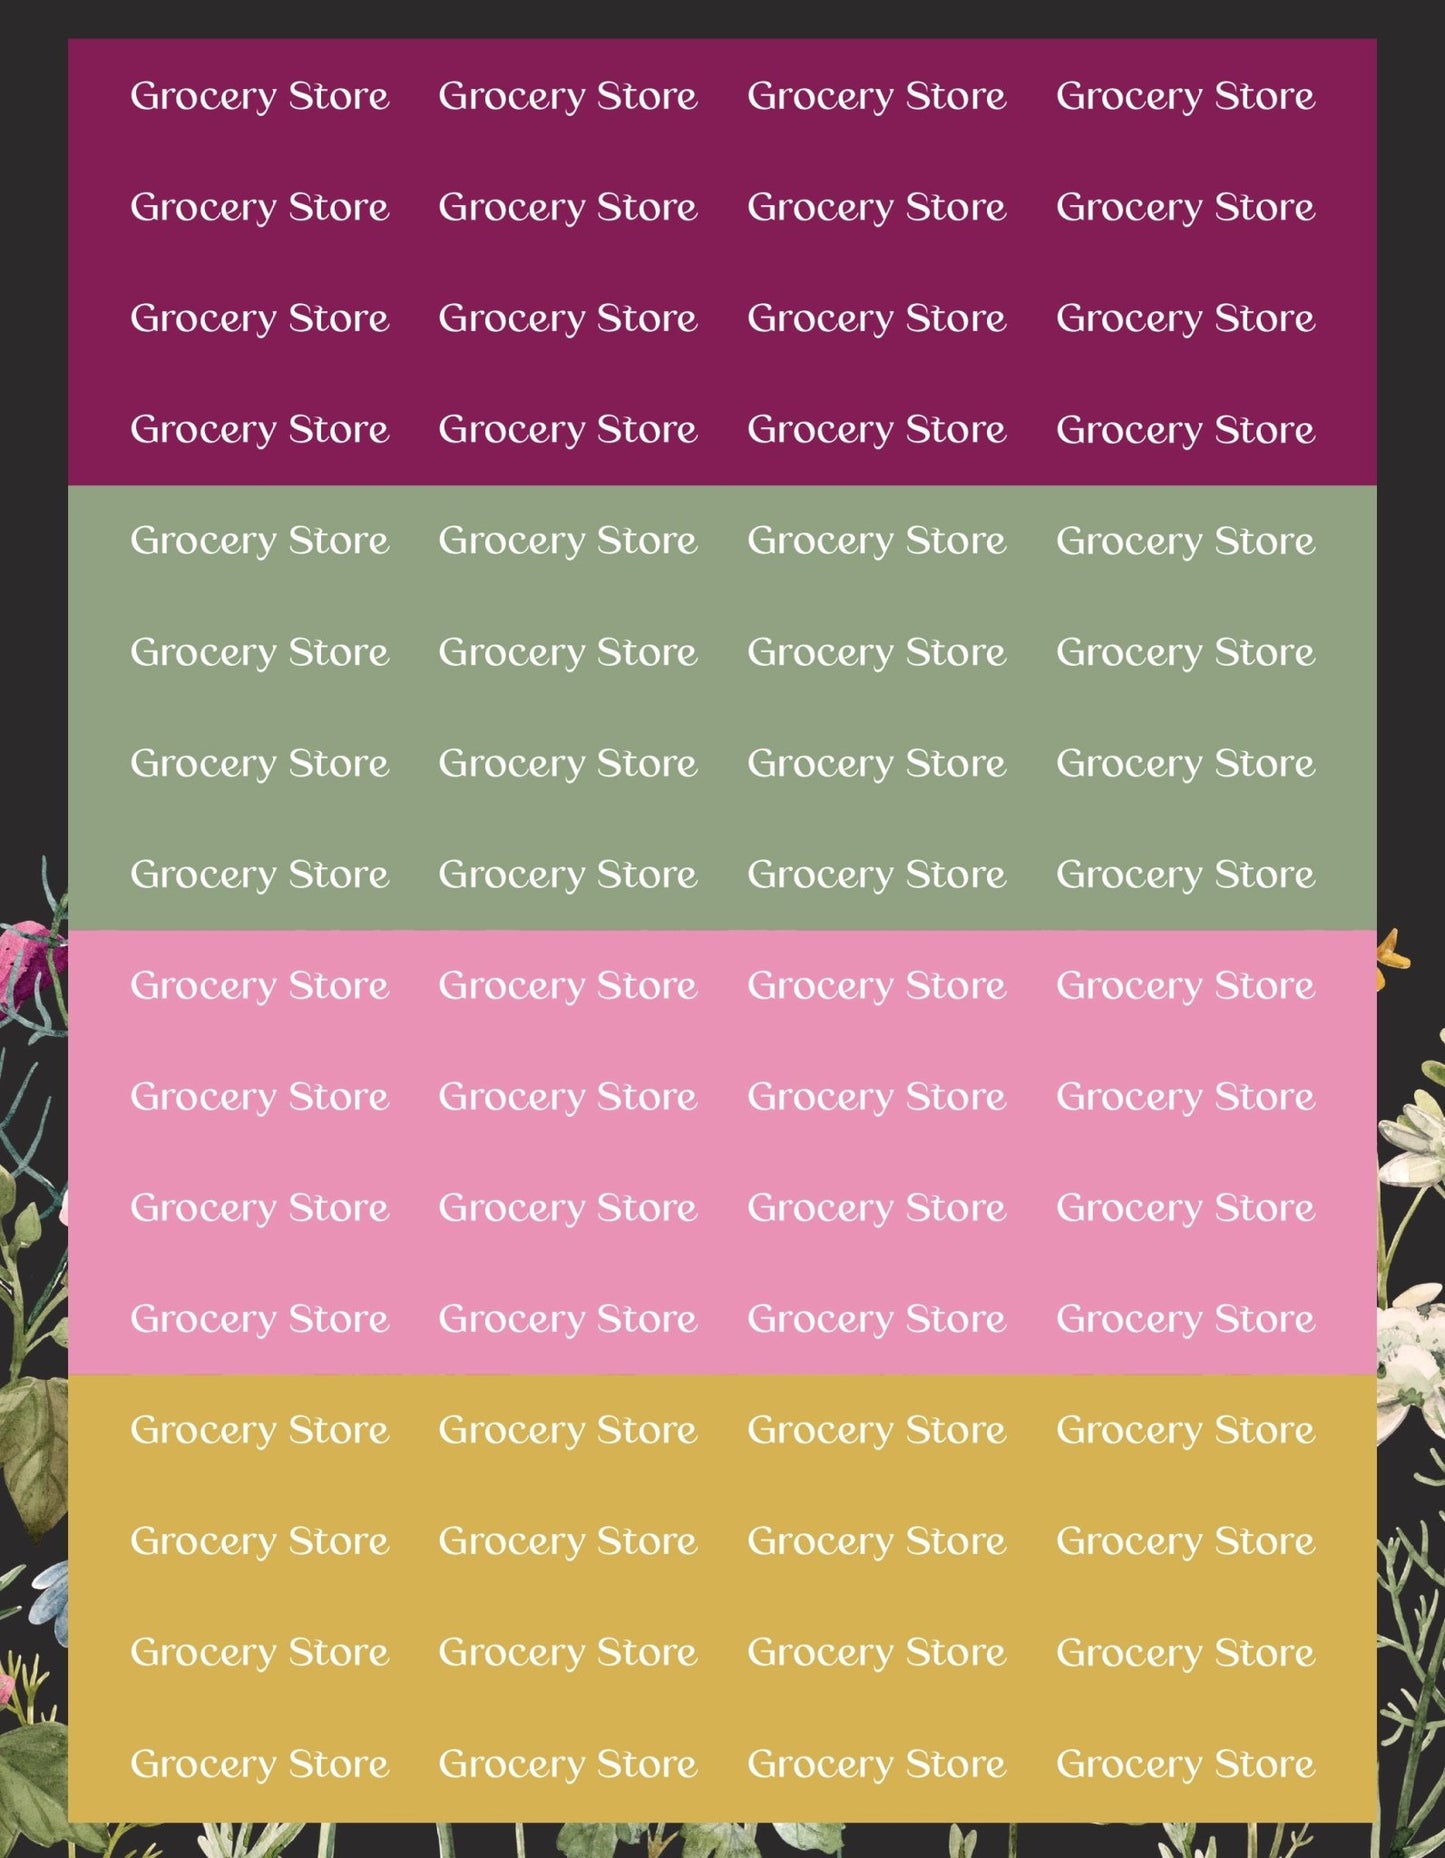 Grocery Store Sticker Sheets - 9 Designs/Colors - Colibri Paper Co